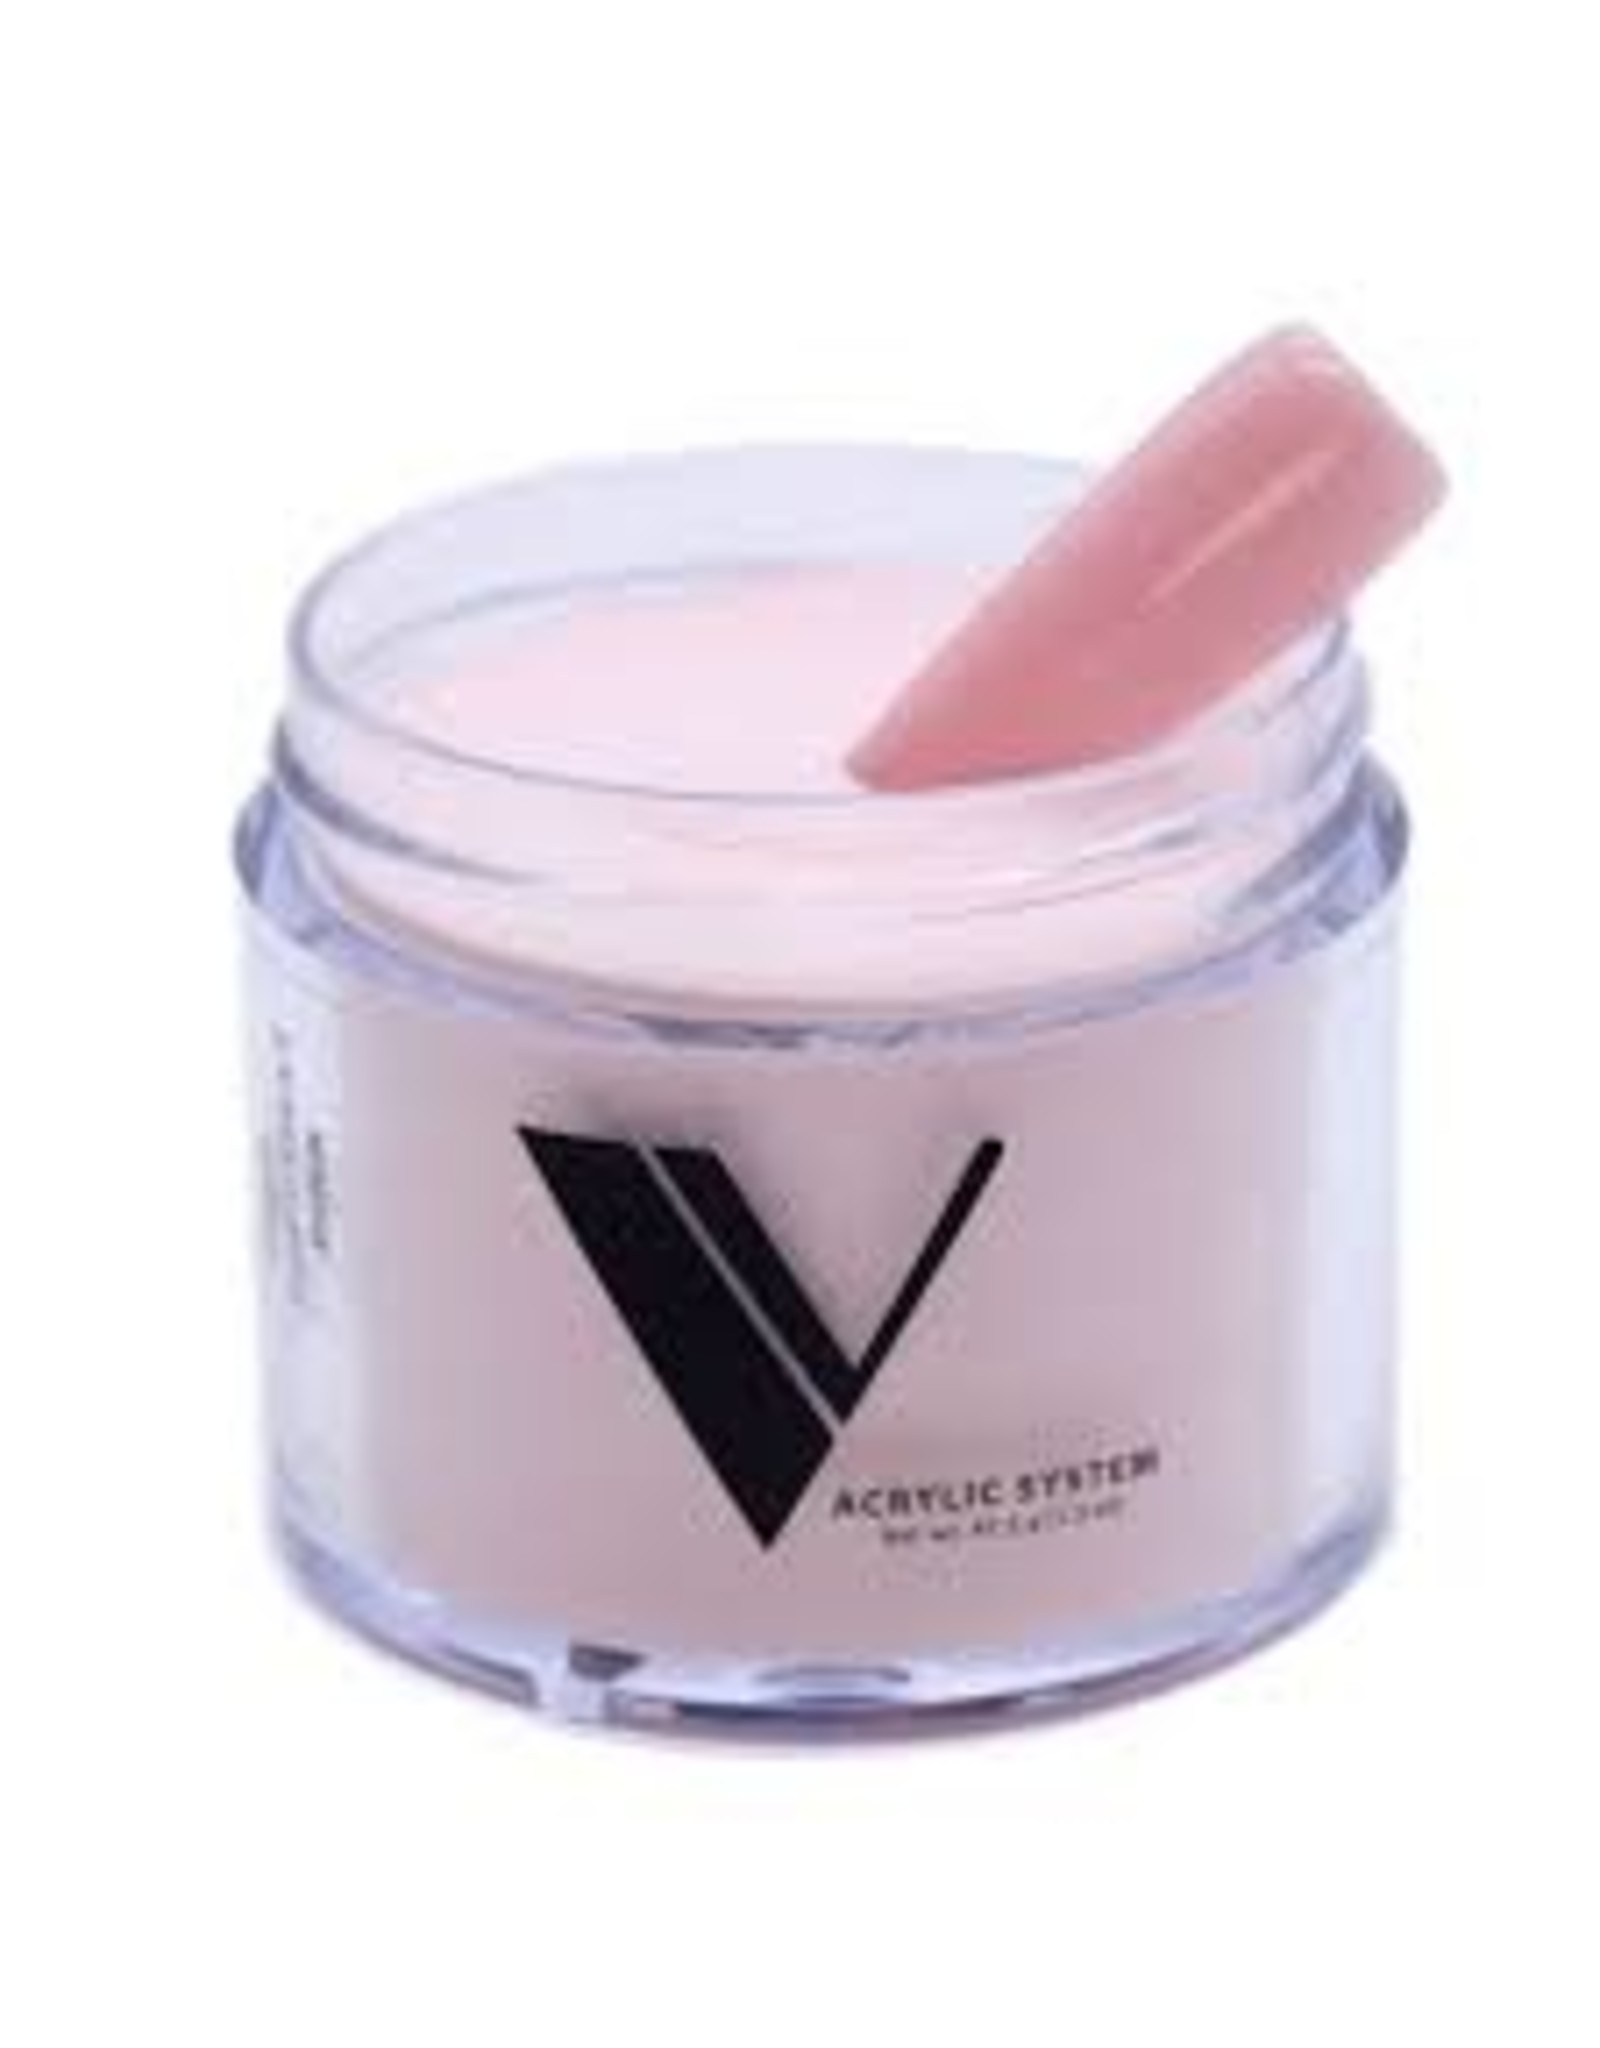 VALENTINO Acrylic System - Prettiest Pink (1.5oz)